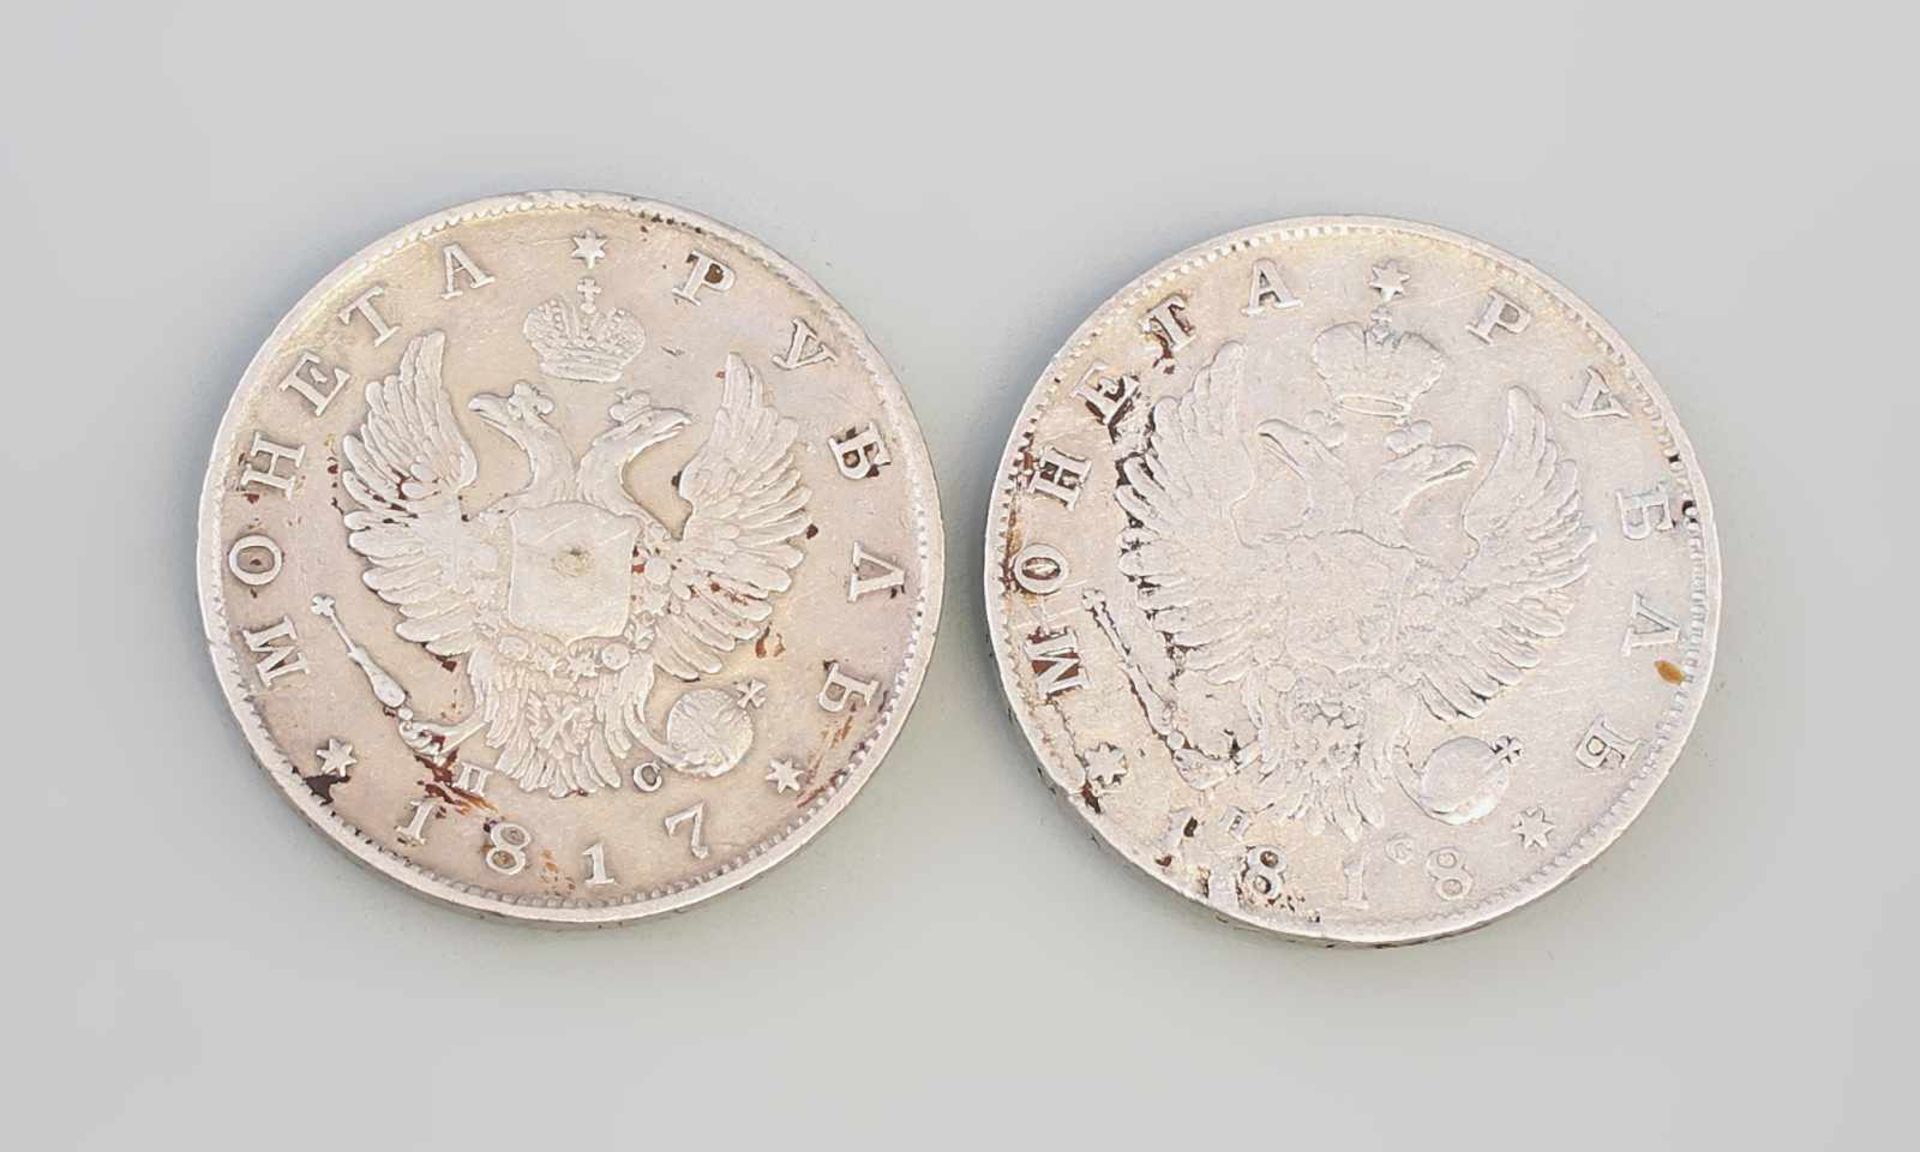 2 x 1 Rubel Russland 1817/18 Alexander I. Russland 1817/18, Initialen PS (Pavel Stupitsyn), 868er - Bild 2 aus 2